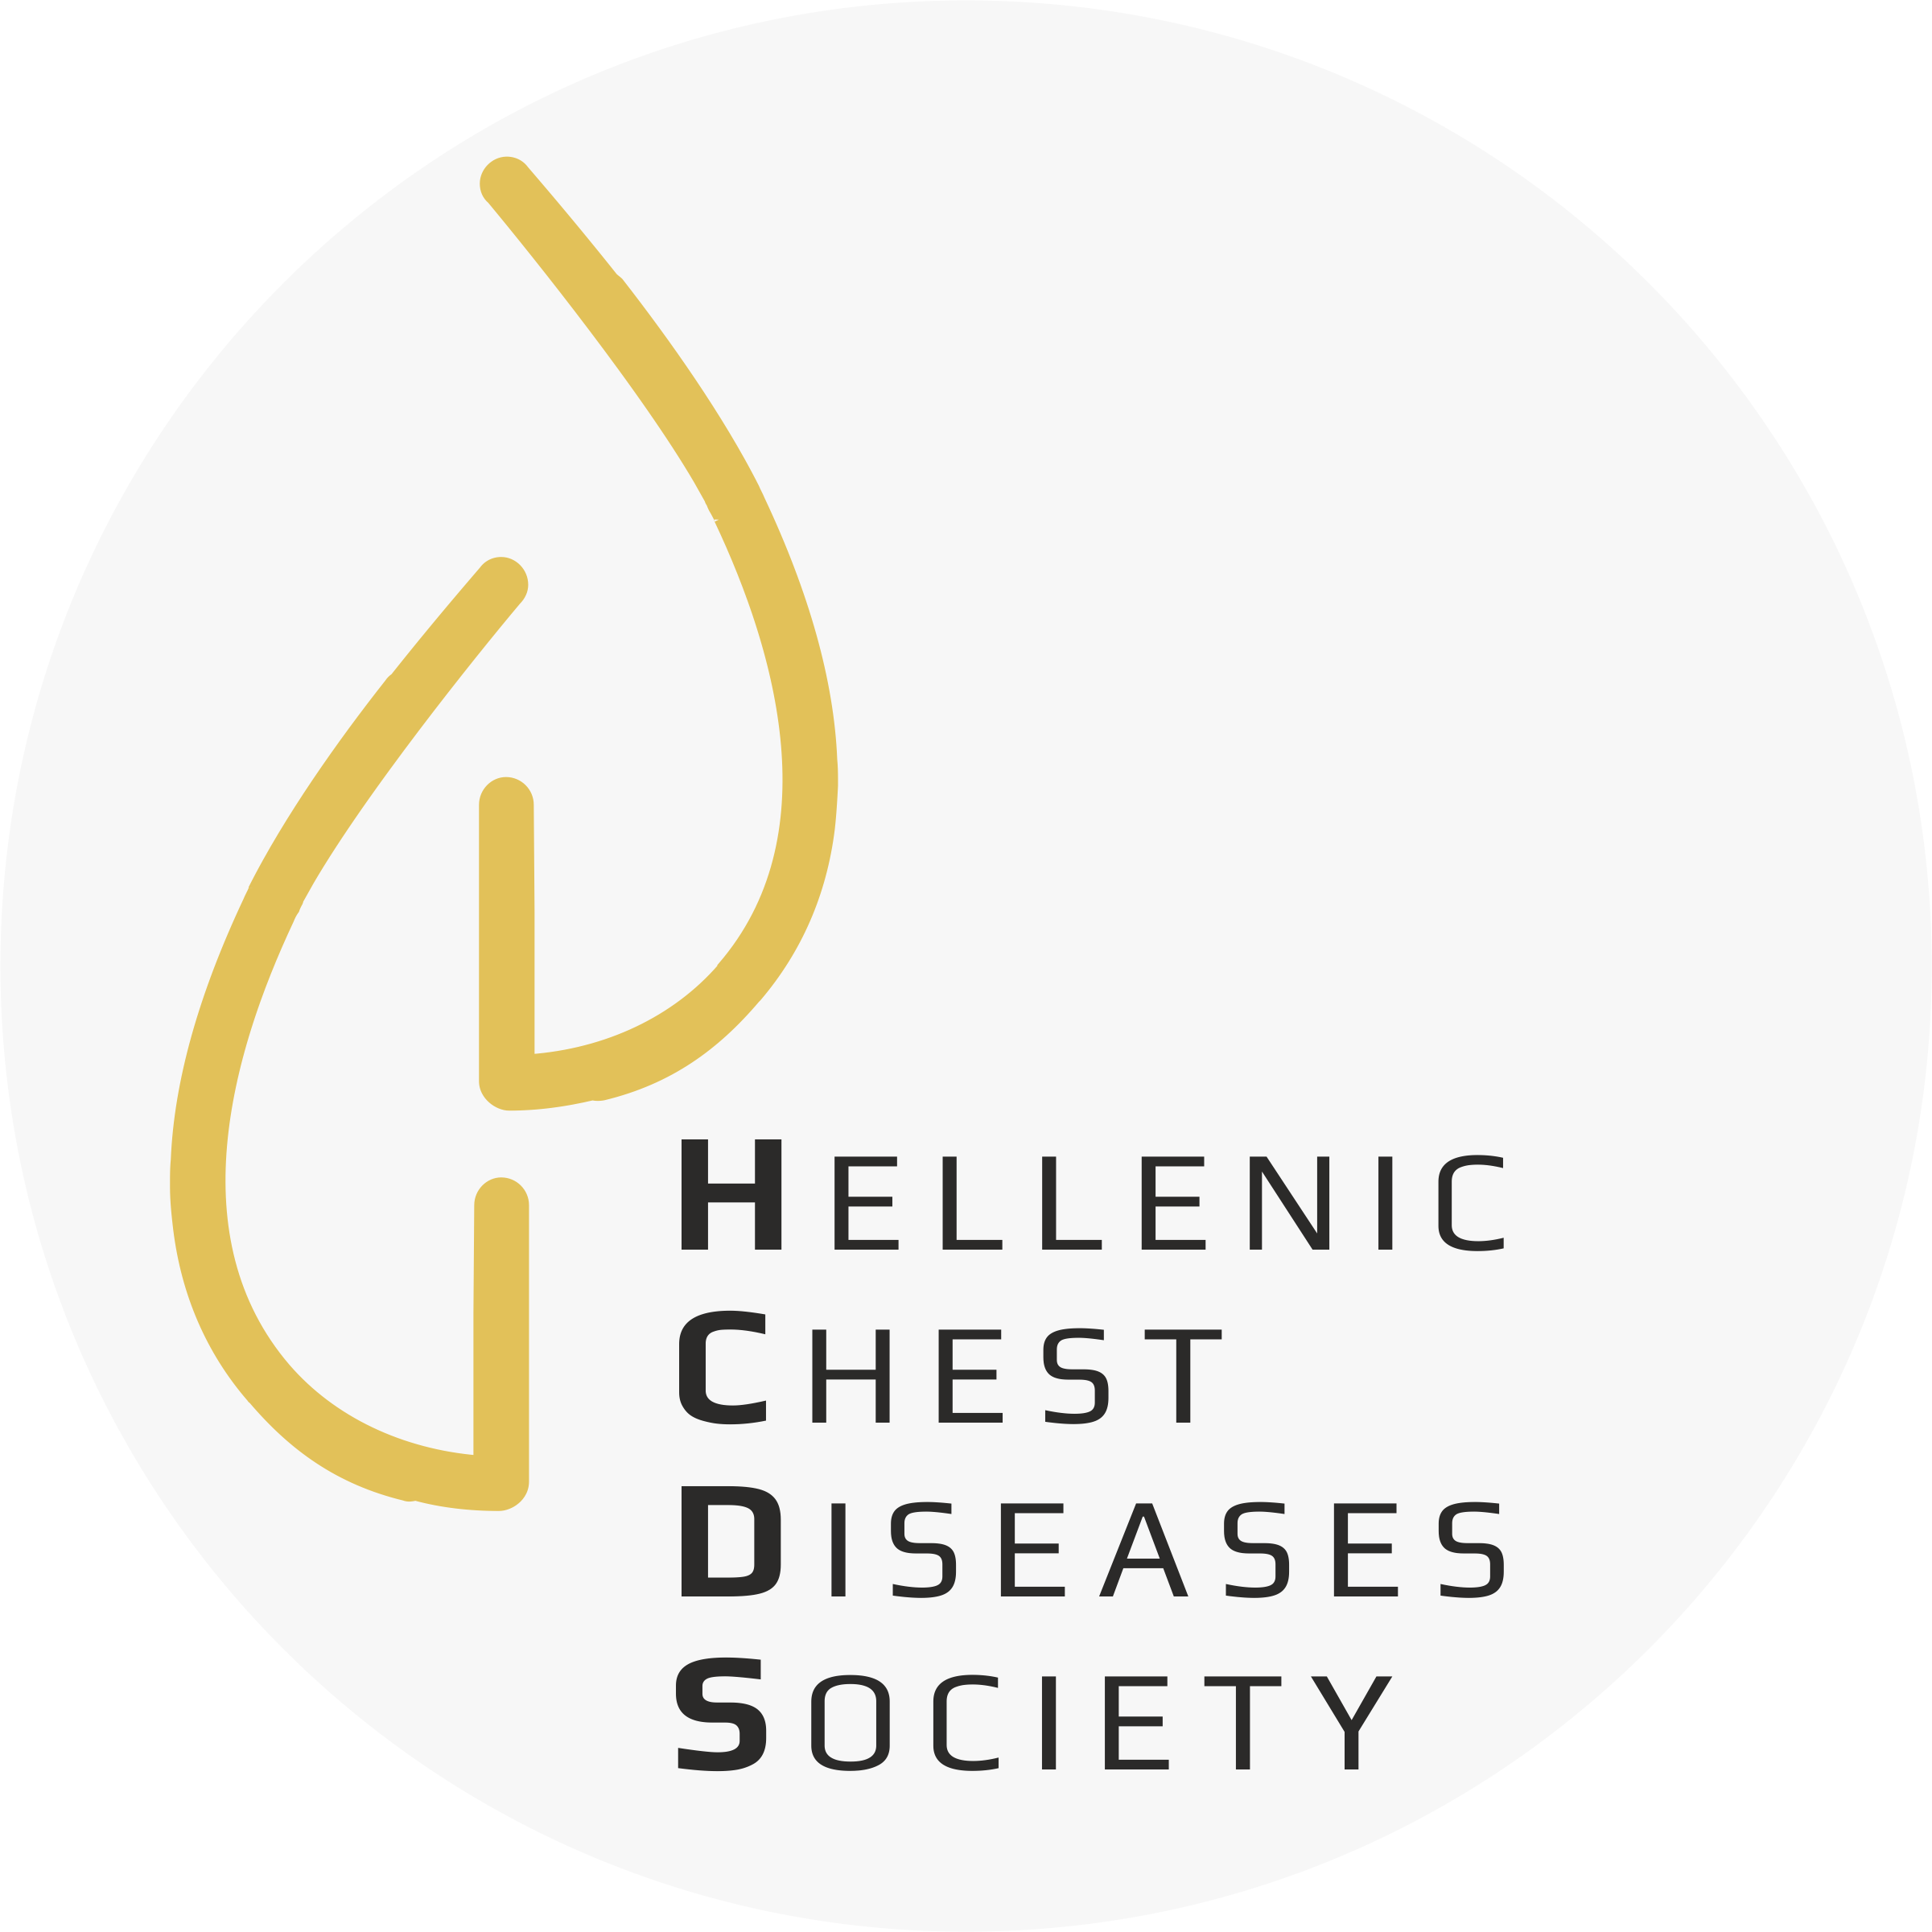 HCDS - Hellenic Chest Diseases Society